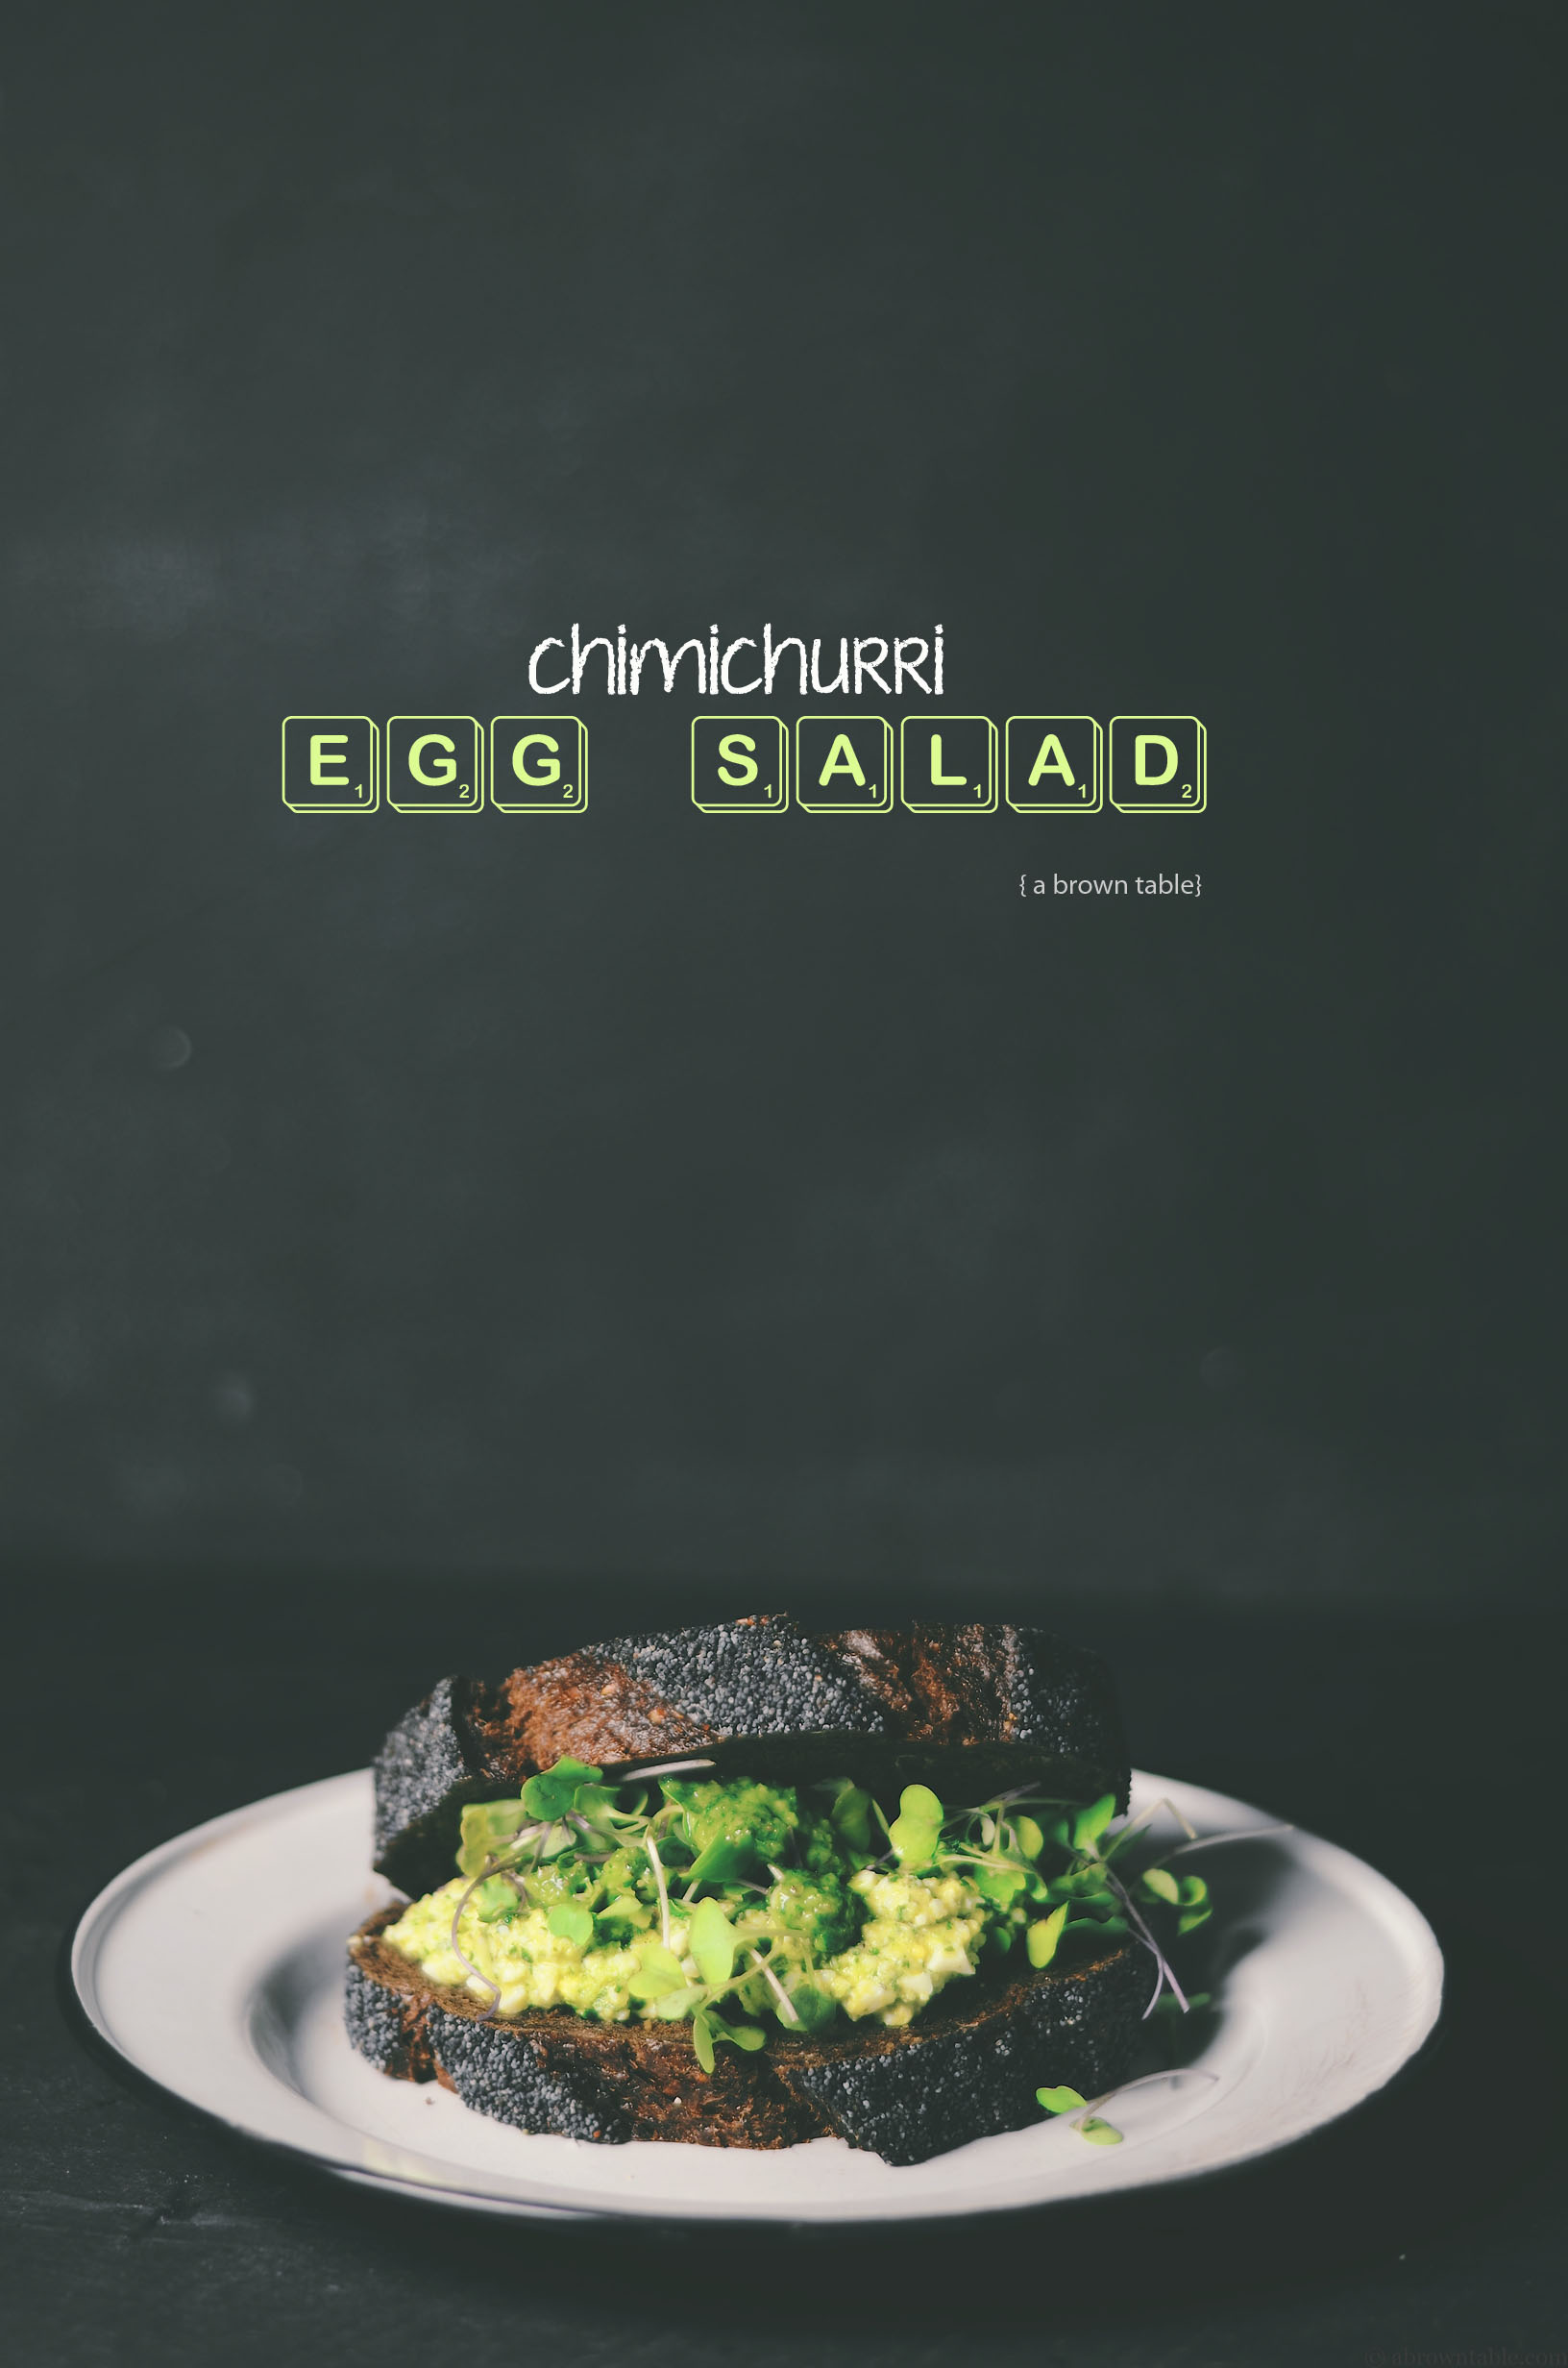 chimichurri flavored egg salad sandwich